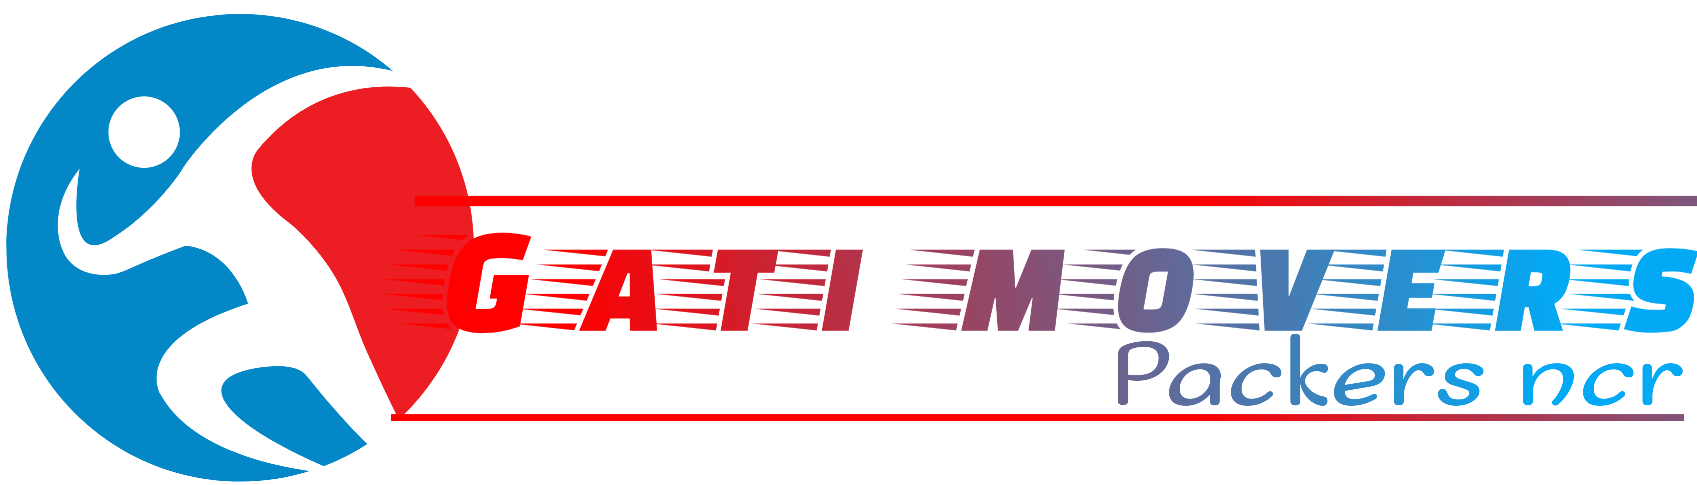 Gati Storage Warehouse Service Logo